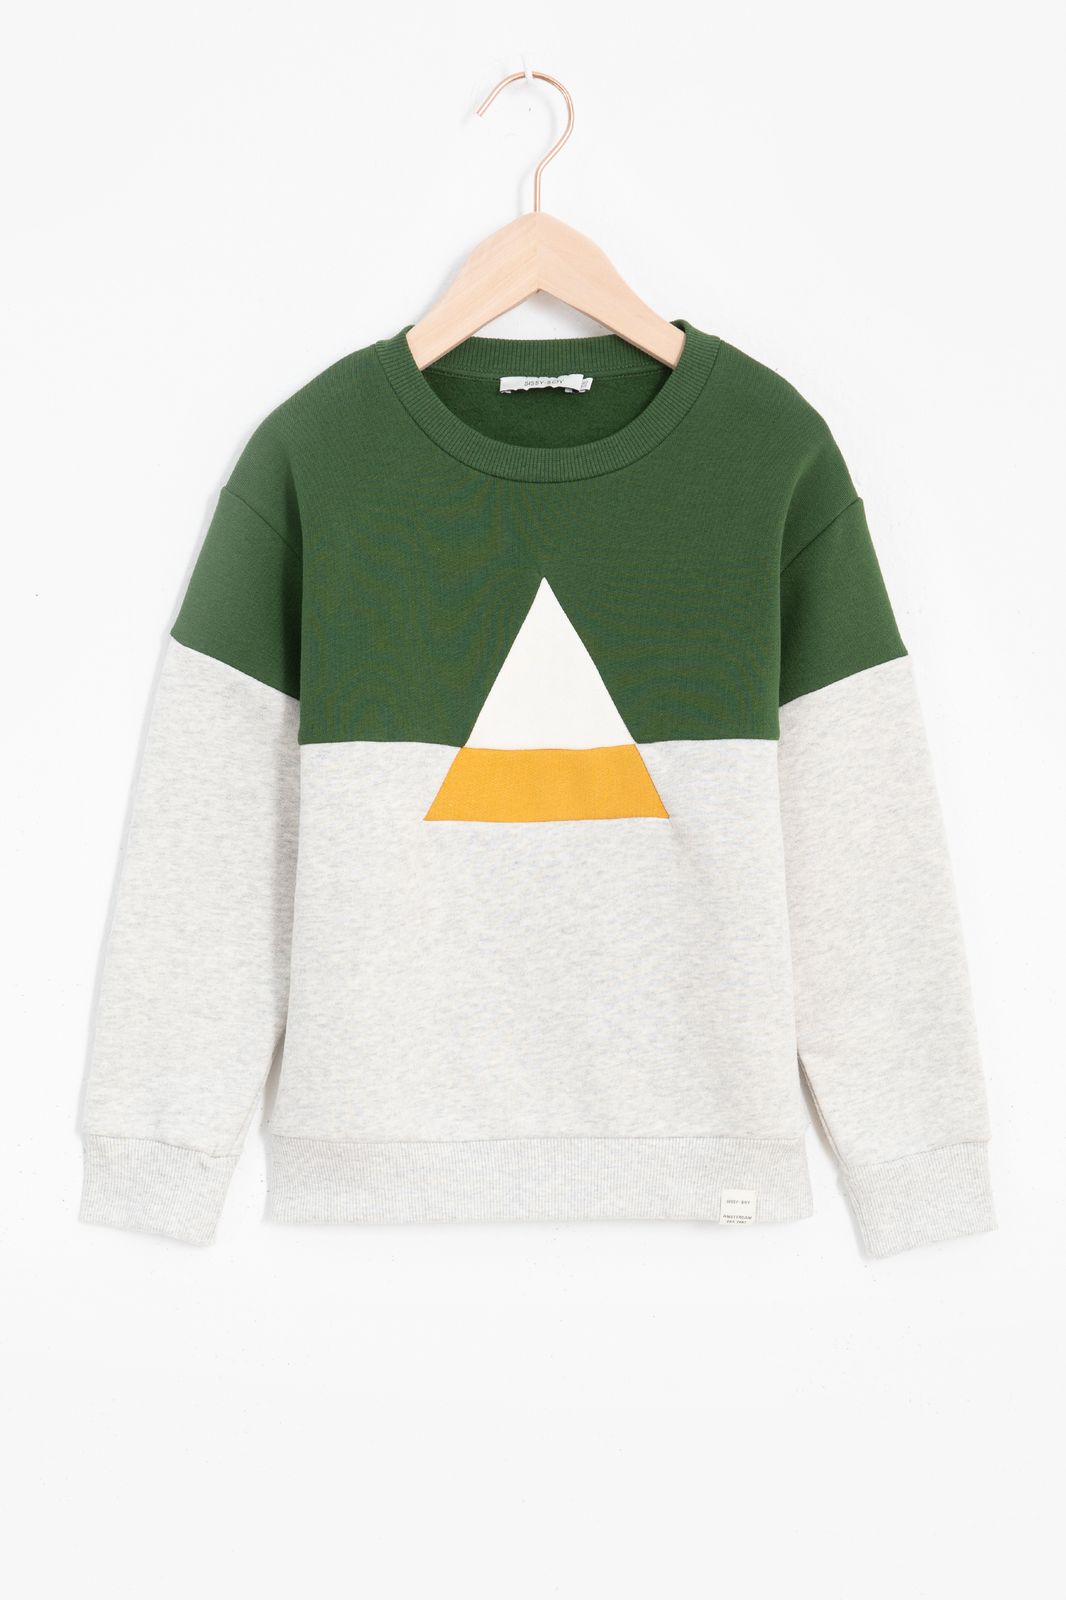 Sweater mit Colorblocking-Dreieck - grün